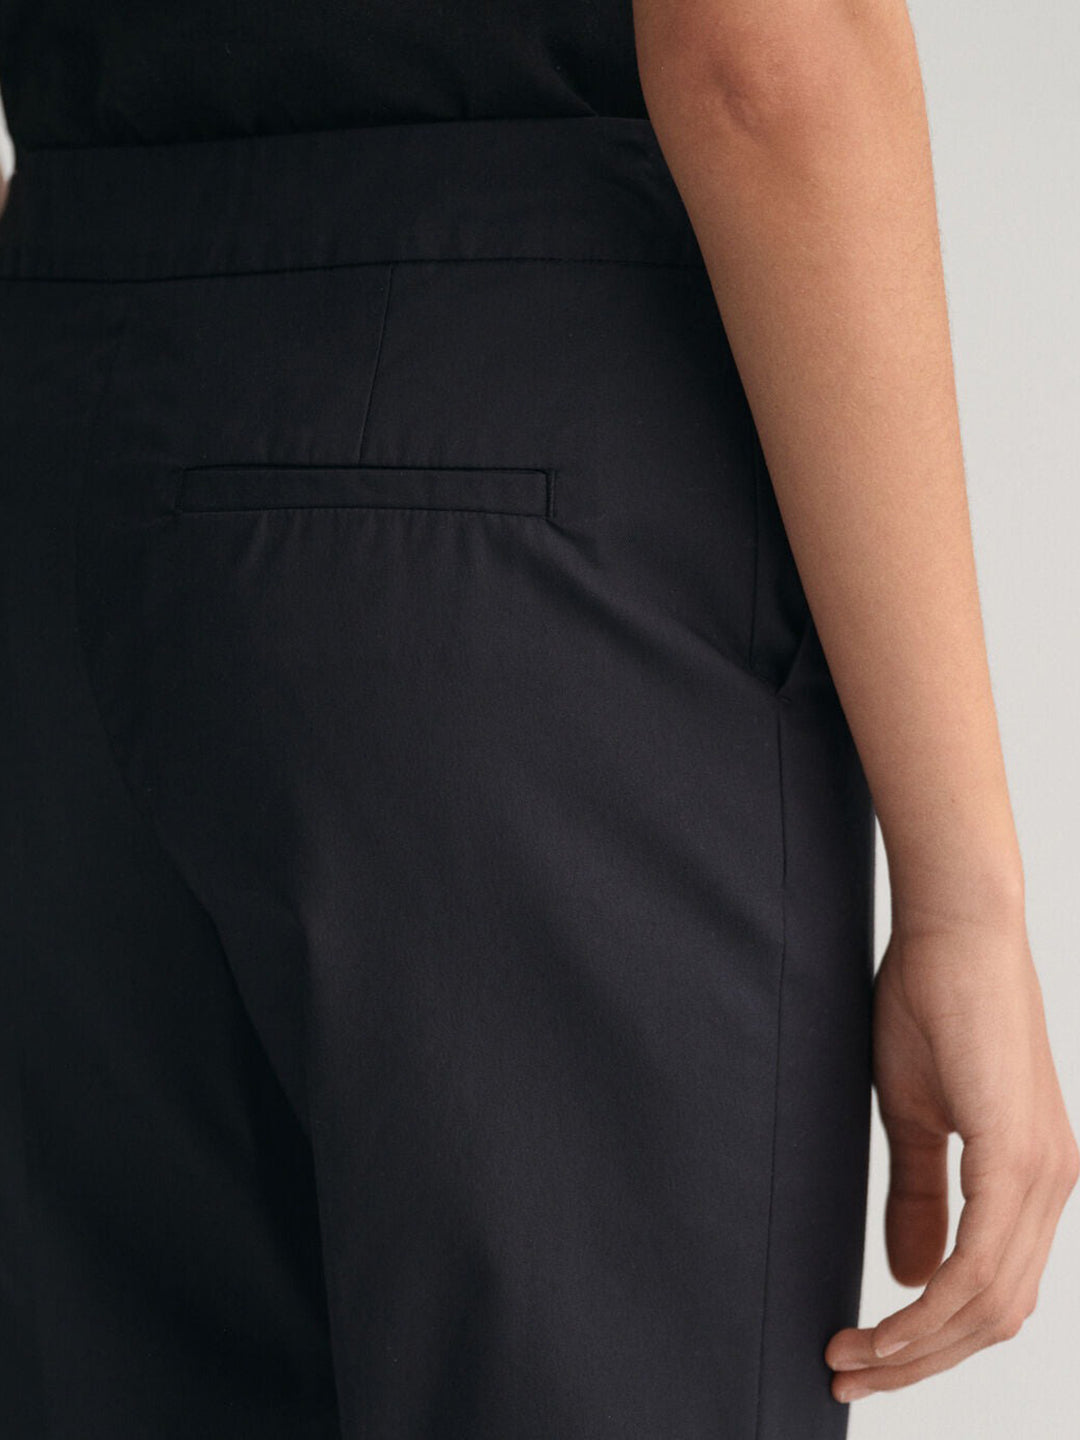 Gant Women Black Solid Mid-rise Slim Fit Trouser